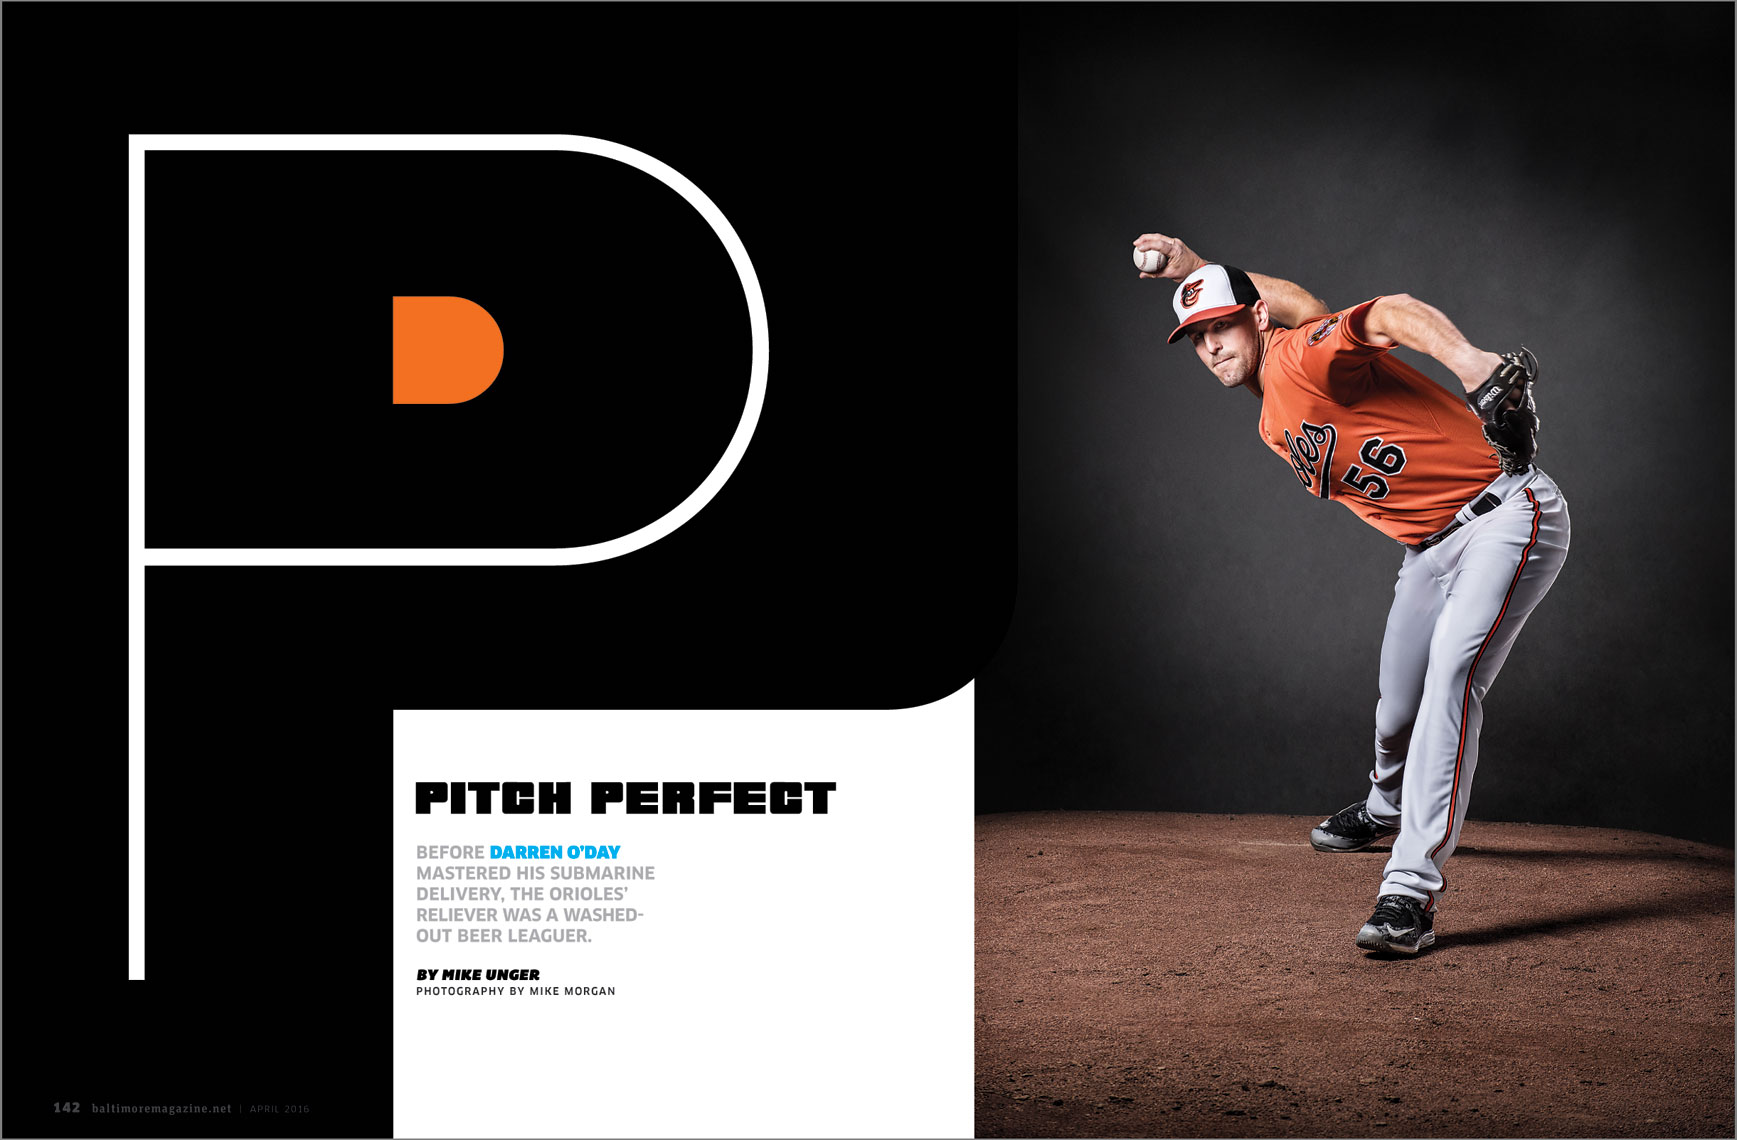 Baltimore Magazine spread featuring Orioles pitcher Darren O